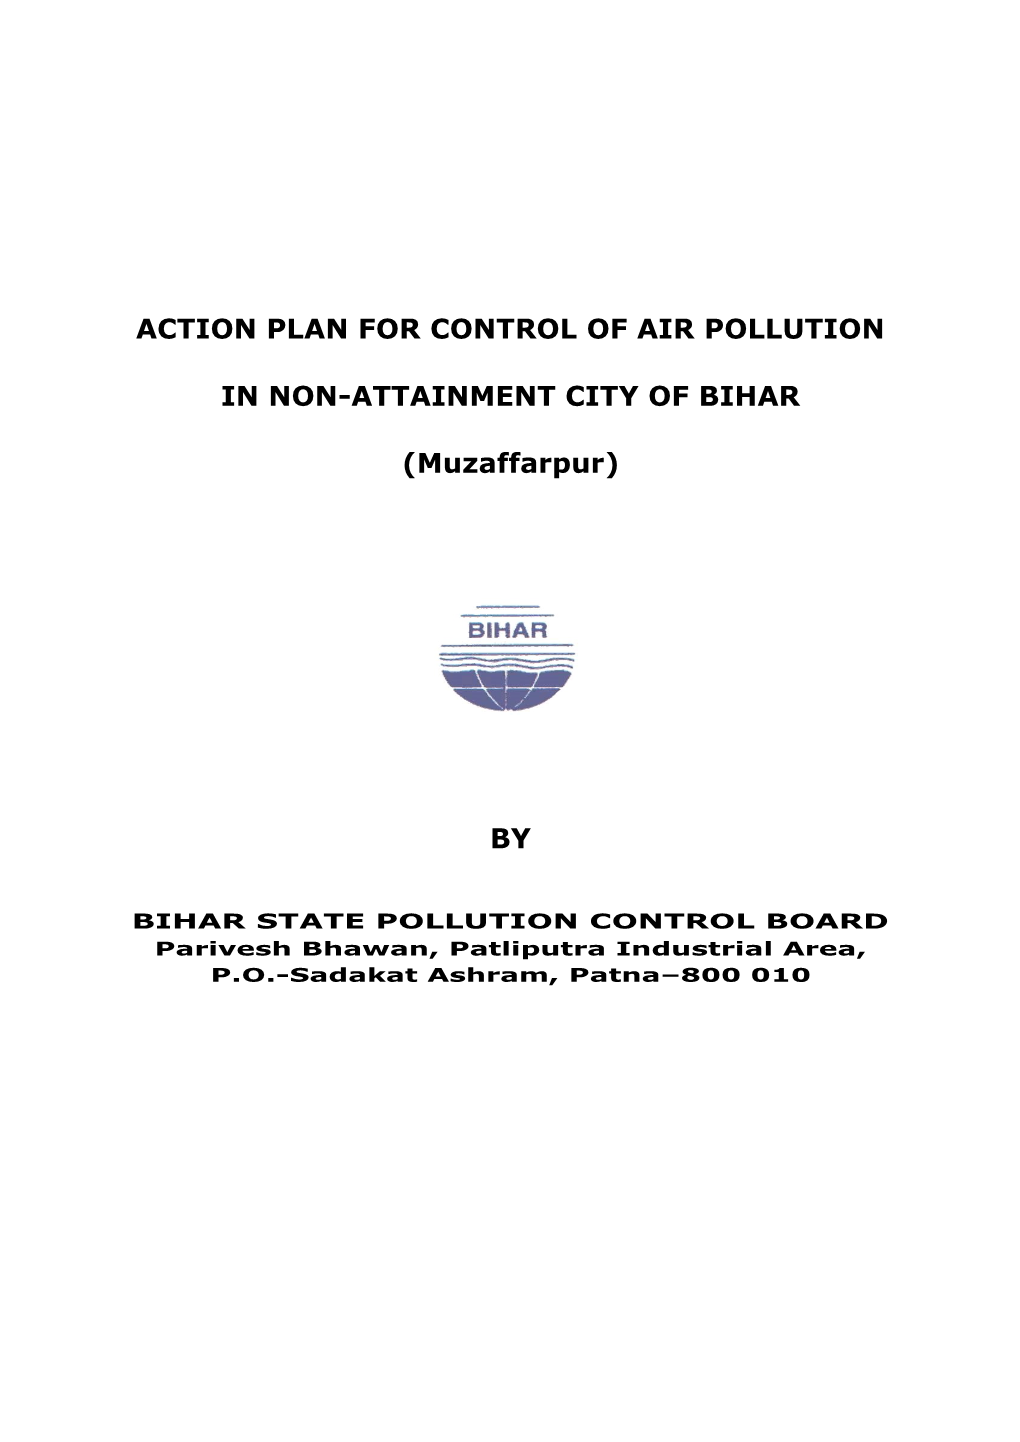 Action Plan for Control of Air Pollution in Non-Attainment City of Bihar (Muzaffarpur)